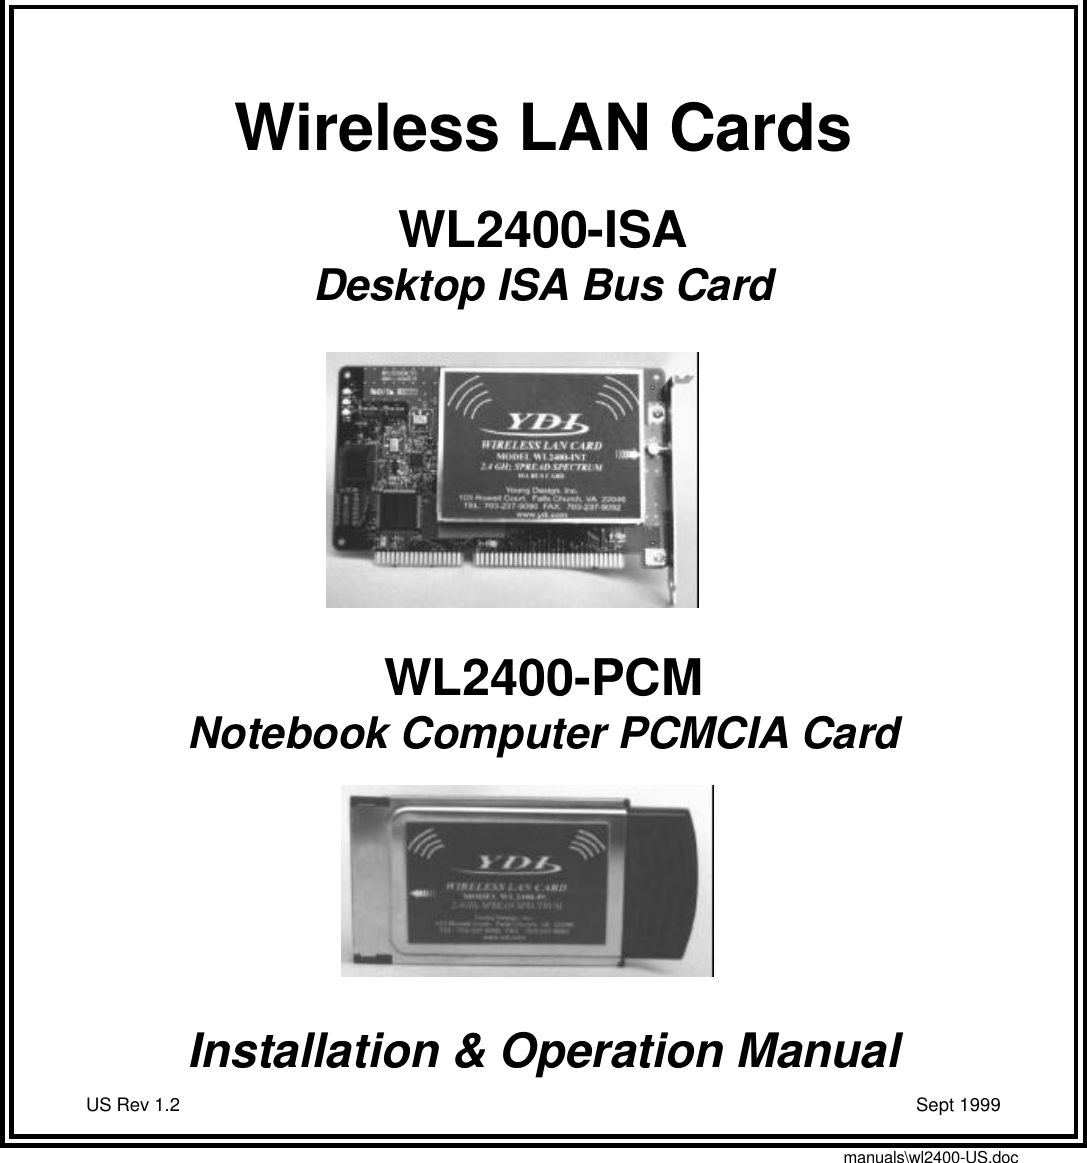 Wireless LAN CardsWL2400-ISADesktop ISA Bus CardWL2400-PCMNotebook Computer PCMCIA CardInstallation &amp; Operation ManualUS Rev 1.2                                                                                                                           Sept 1999manuals\wl2400-US.doc